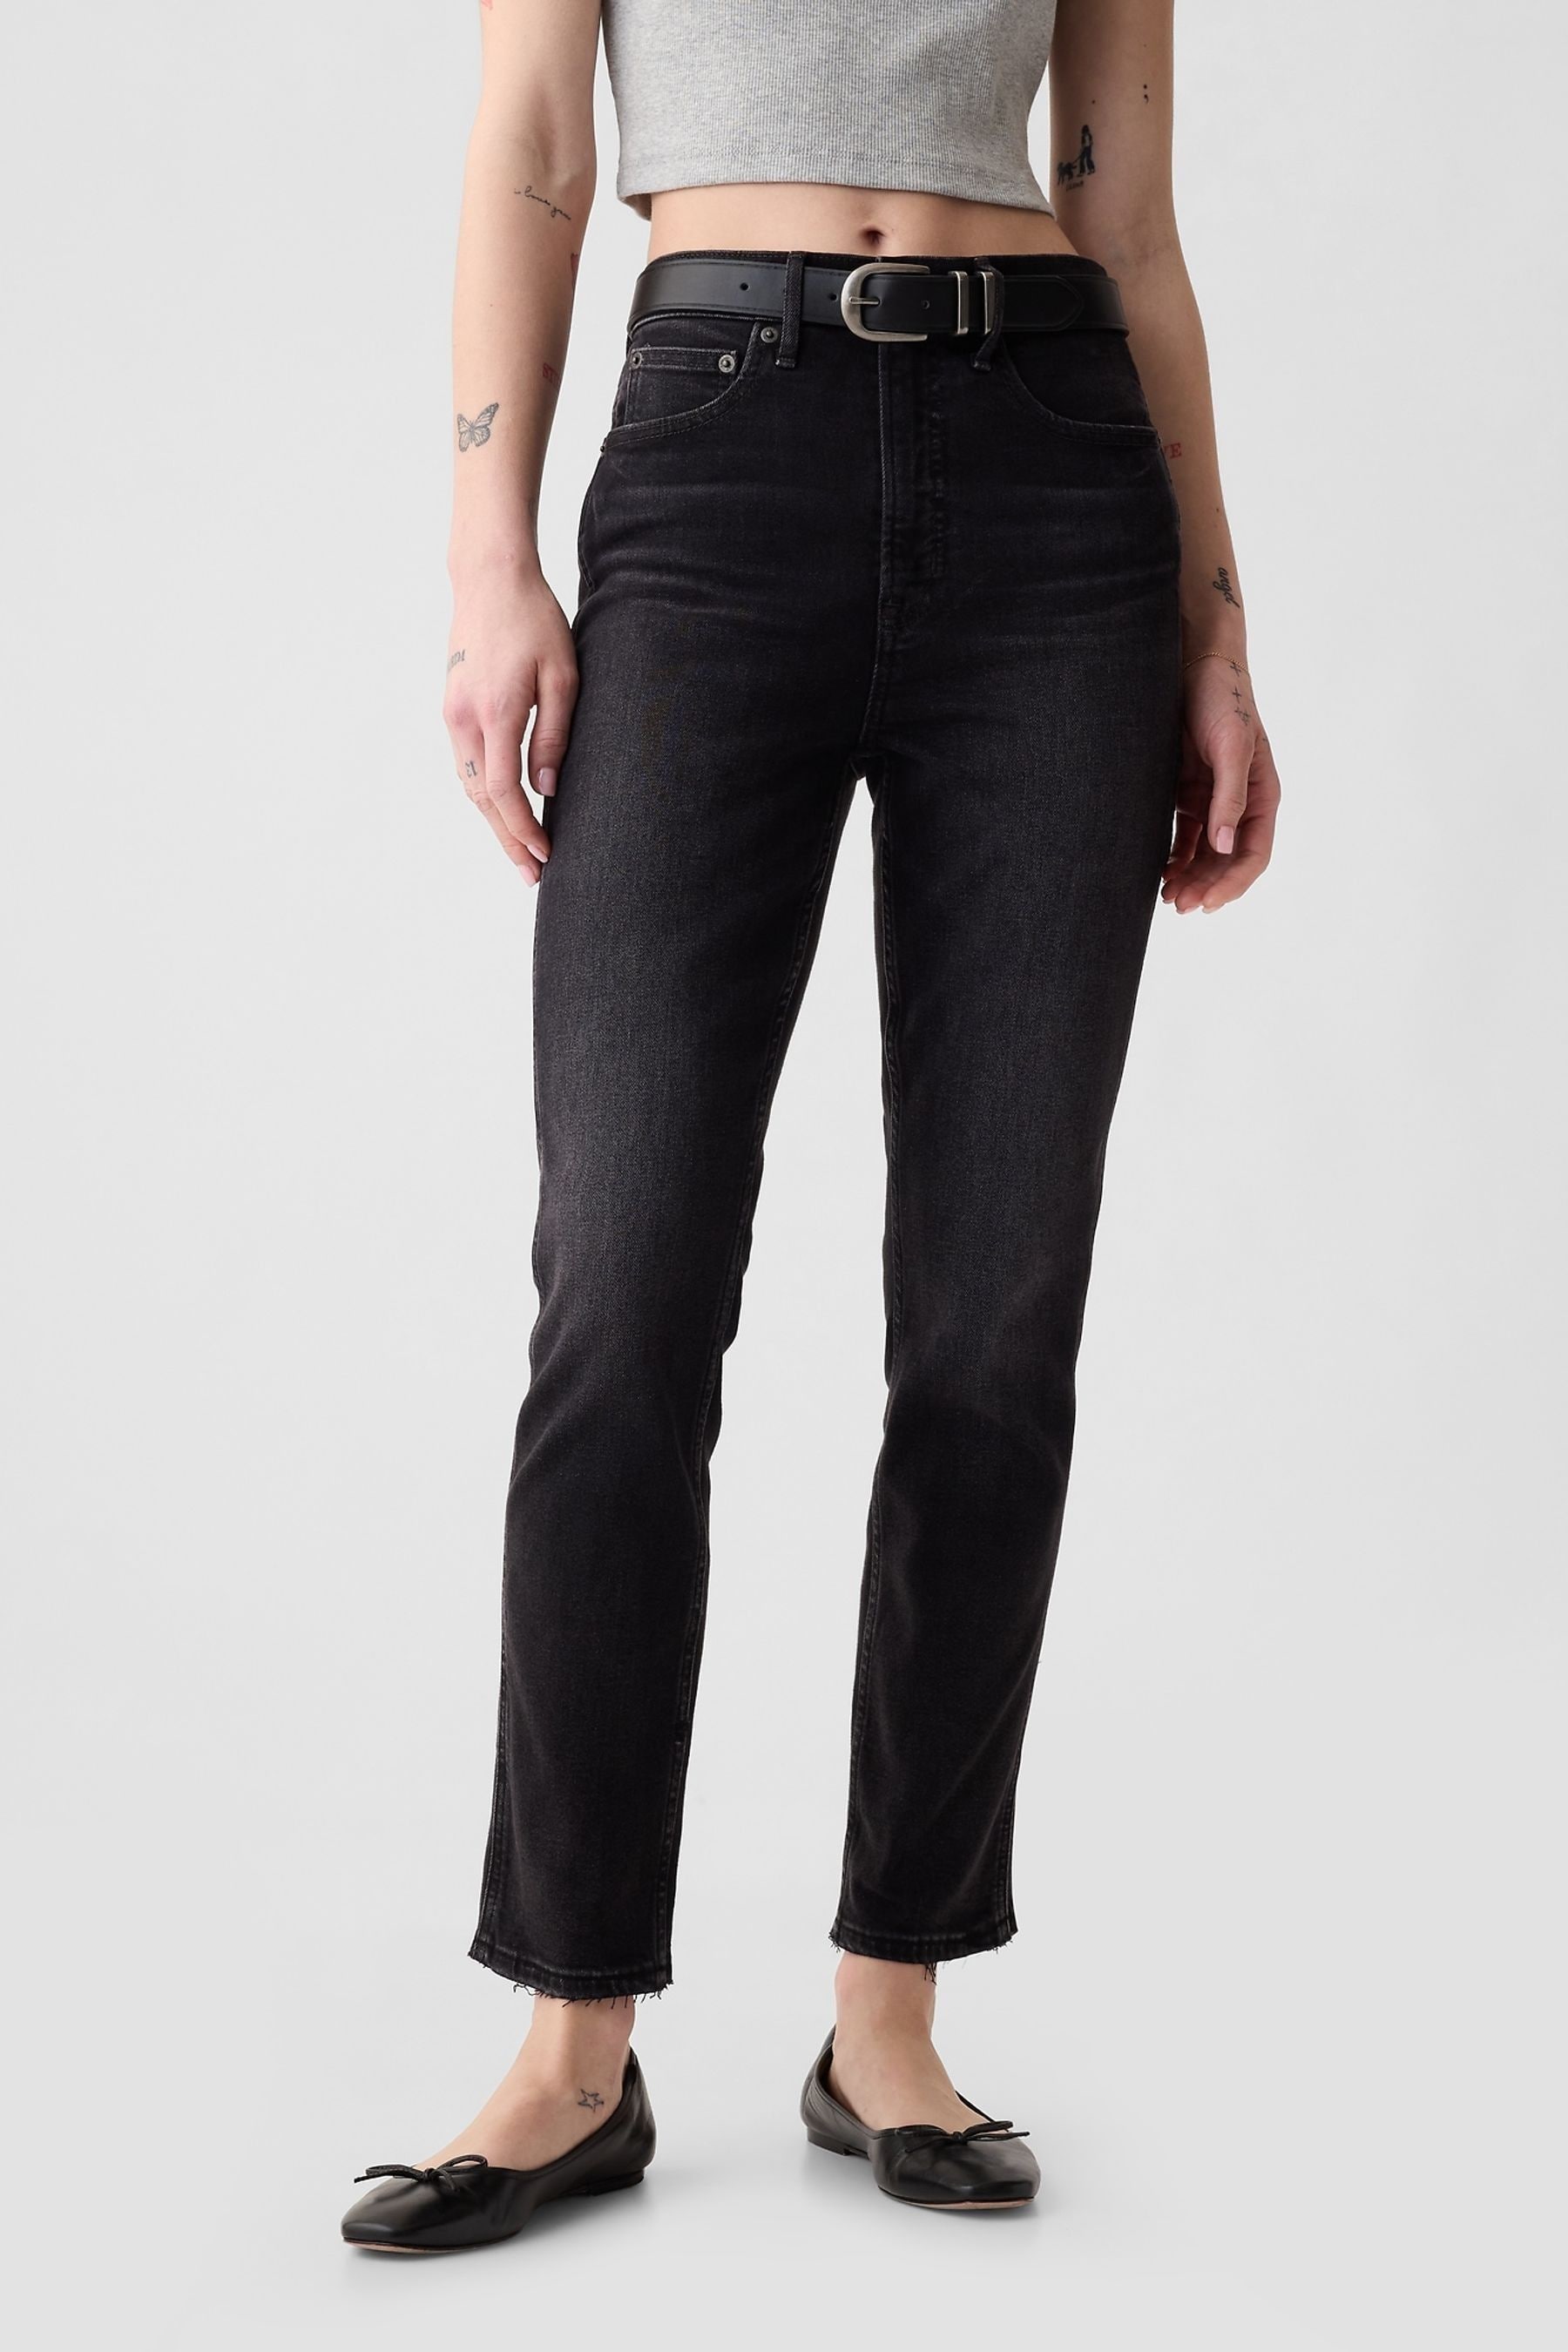 Buy Gap Black High Waisted Vintage Slim Jeans from the Next UK online shop